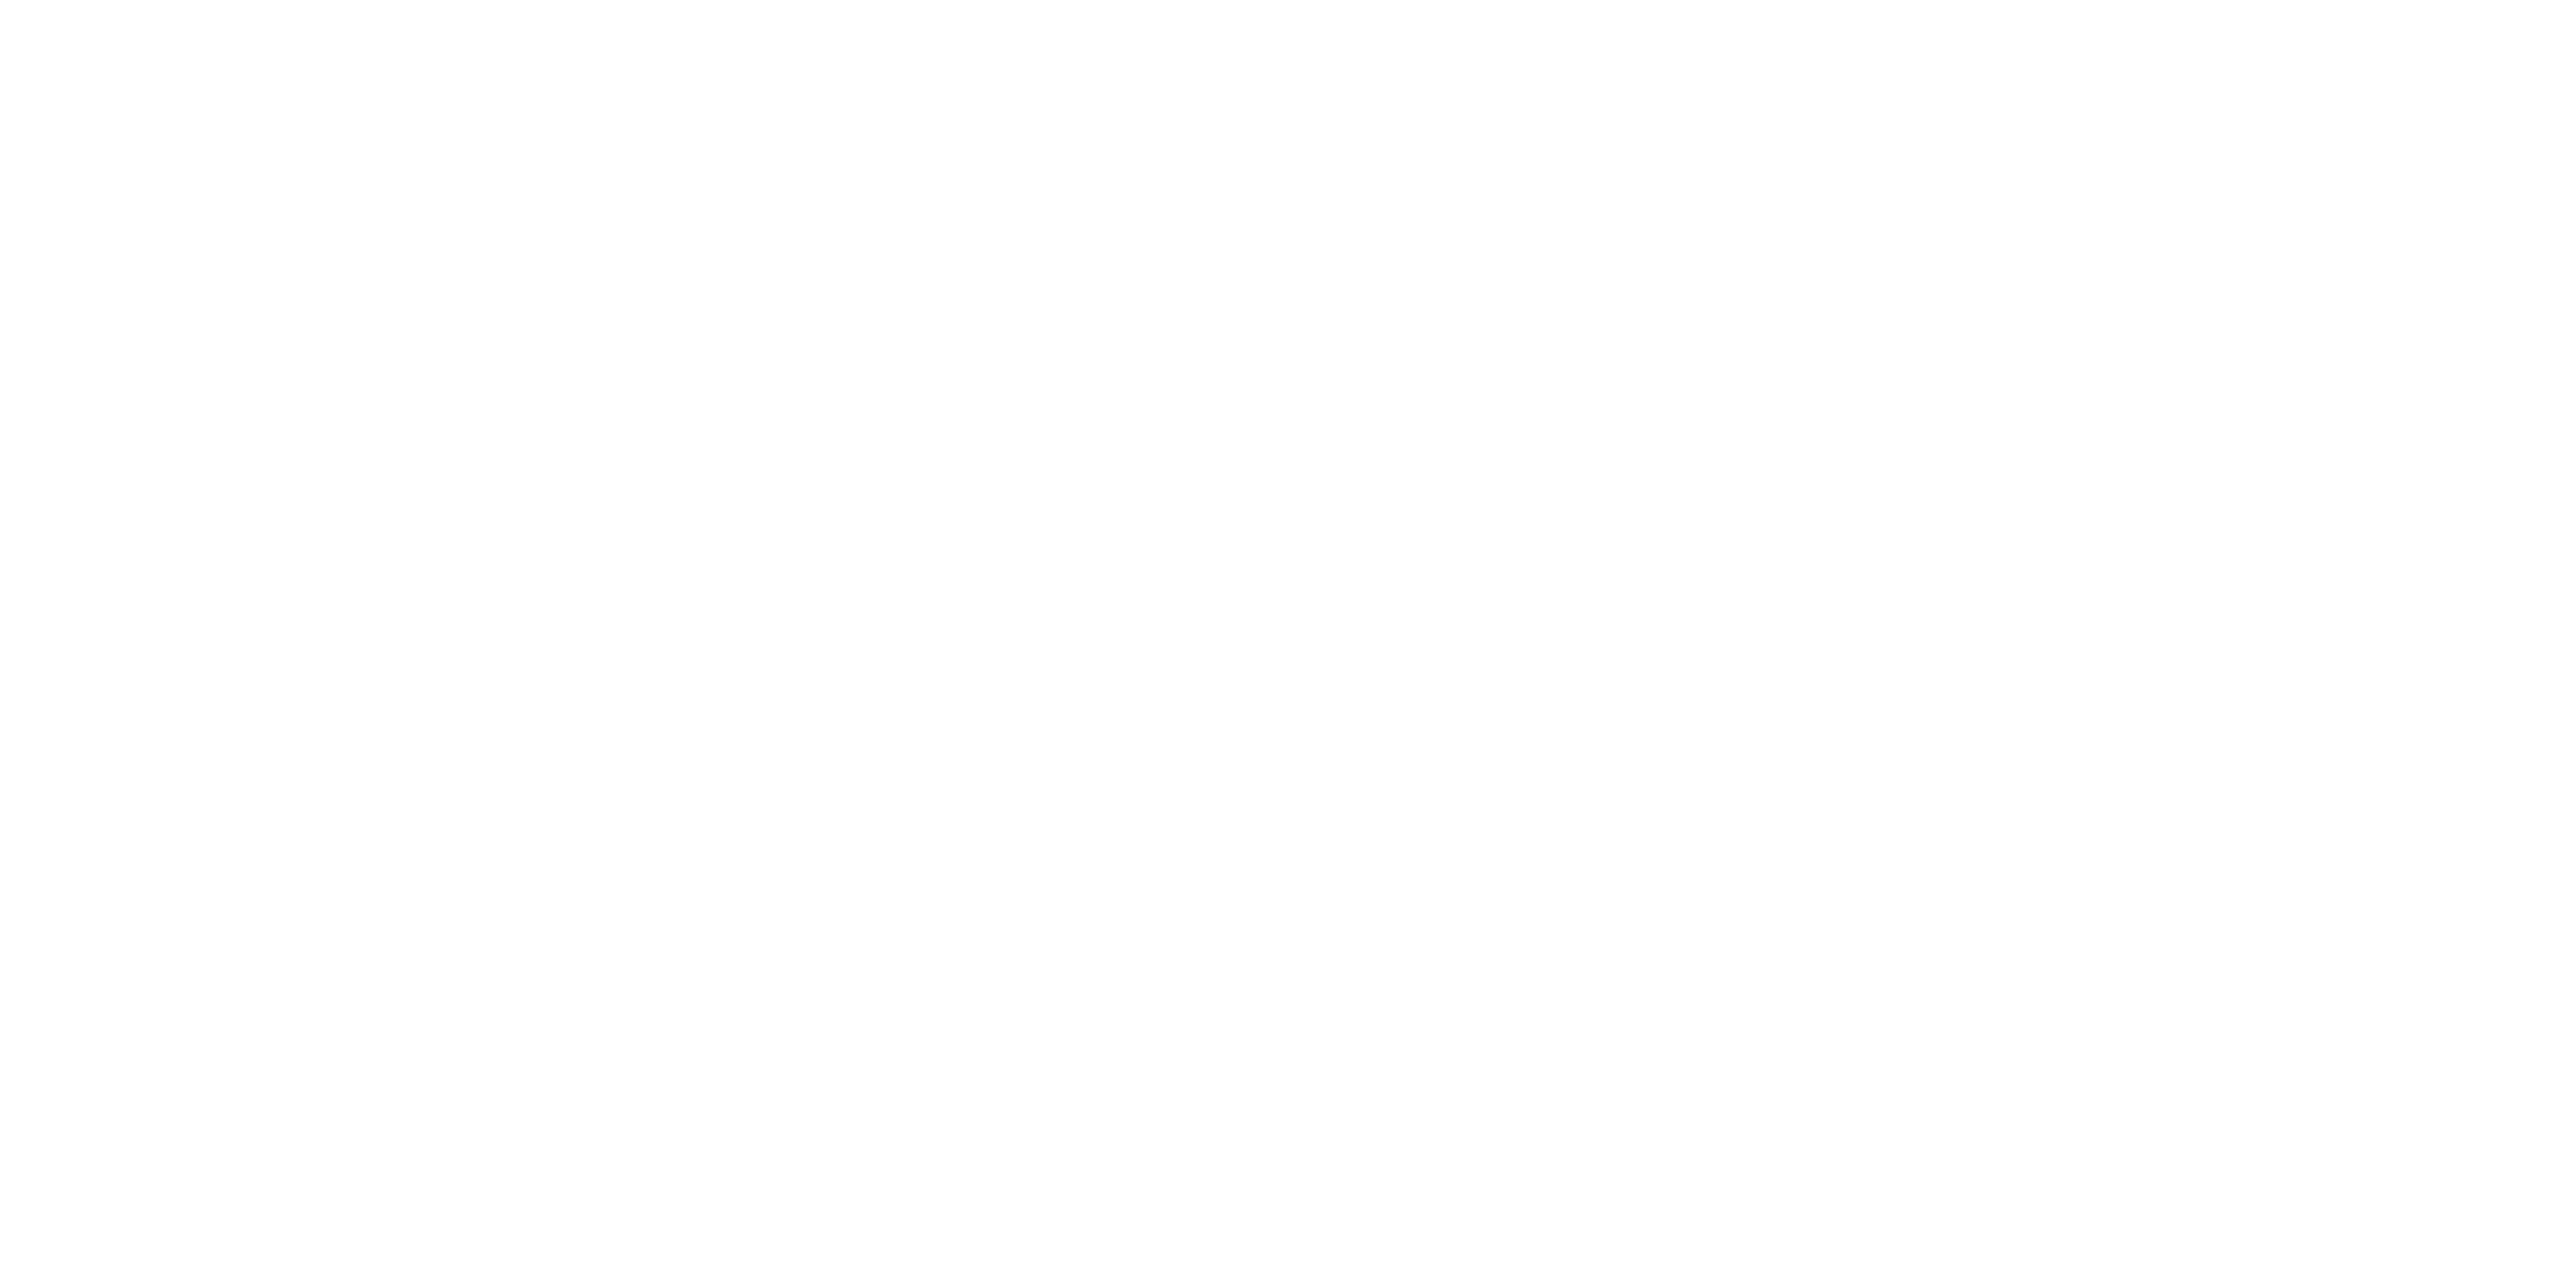 Royal College of Surgeons of England Logo